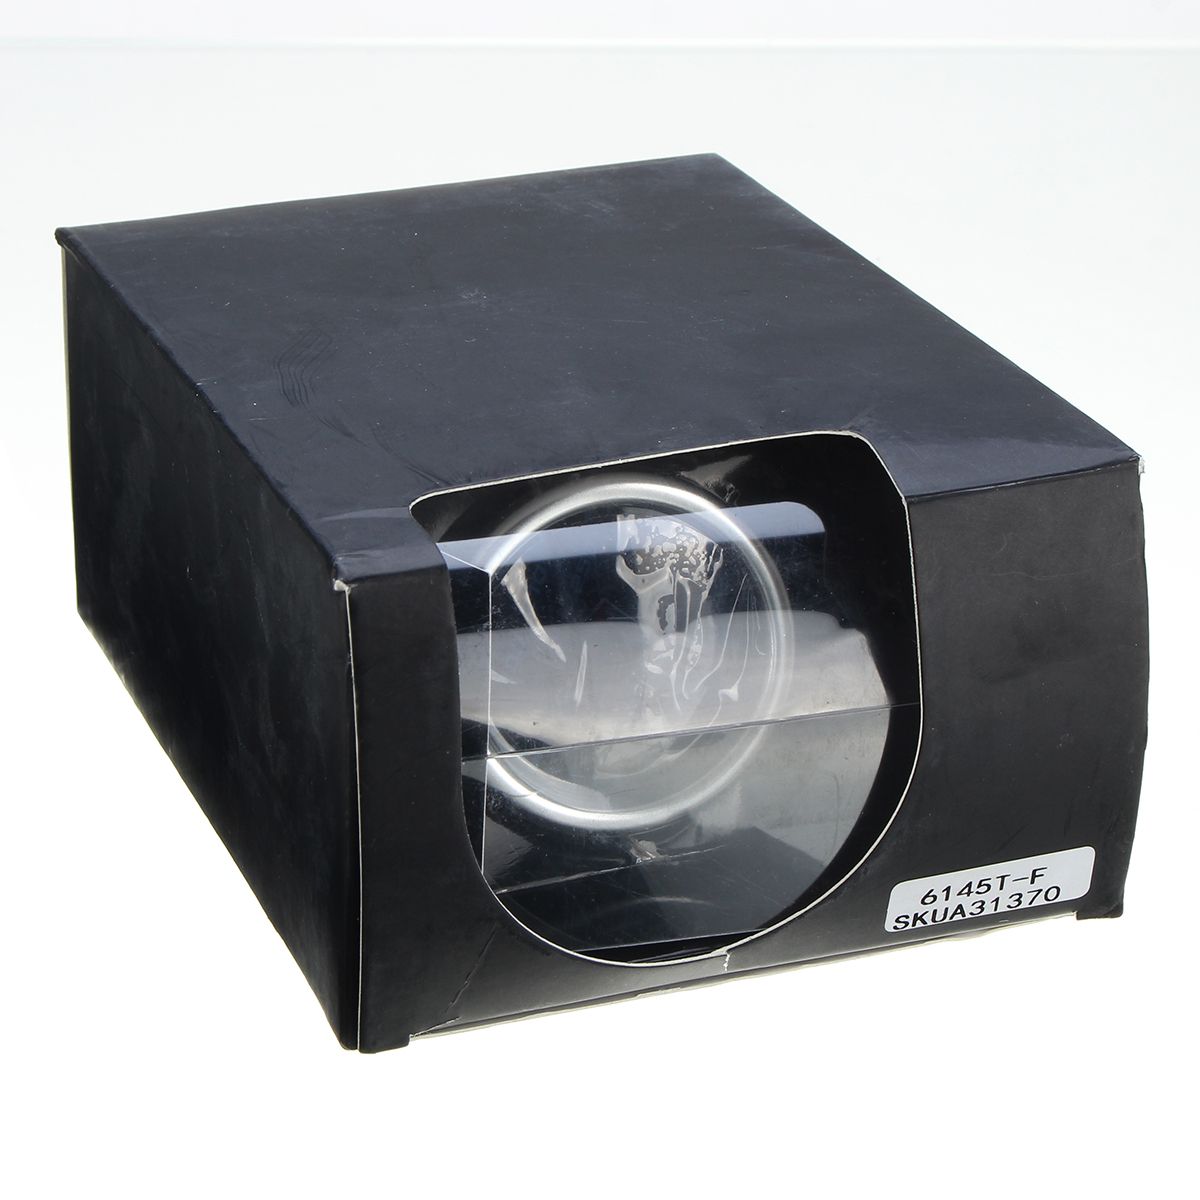 52mm-2-Inch-Universal-Car-Smoke-Lens-LED-Pointer-Water-Oil-Temperature-Temp-Gauge-Meter-1388544